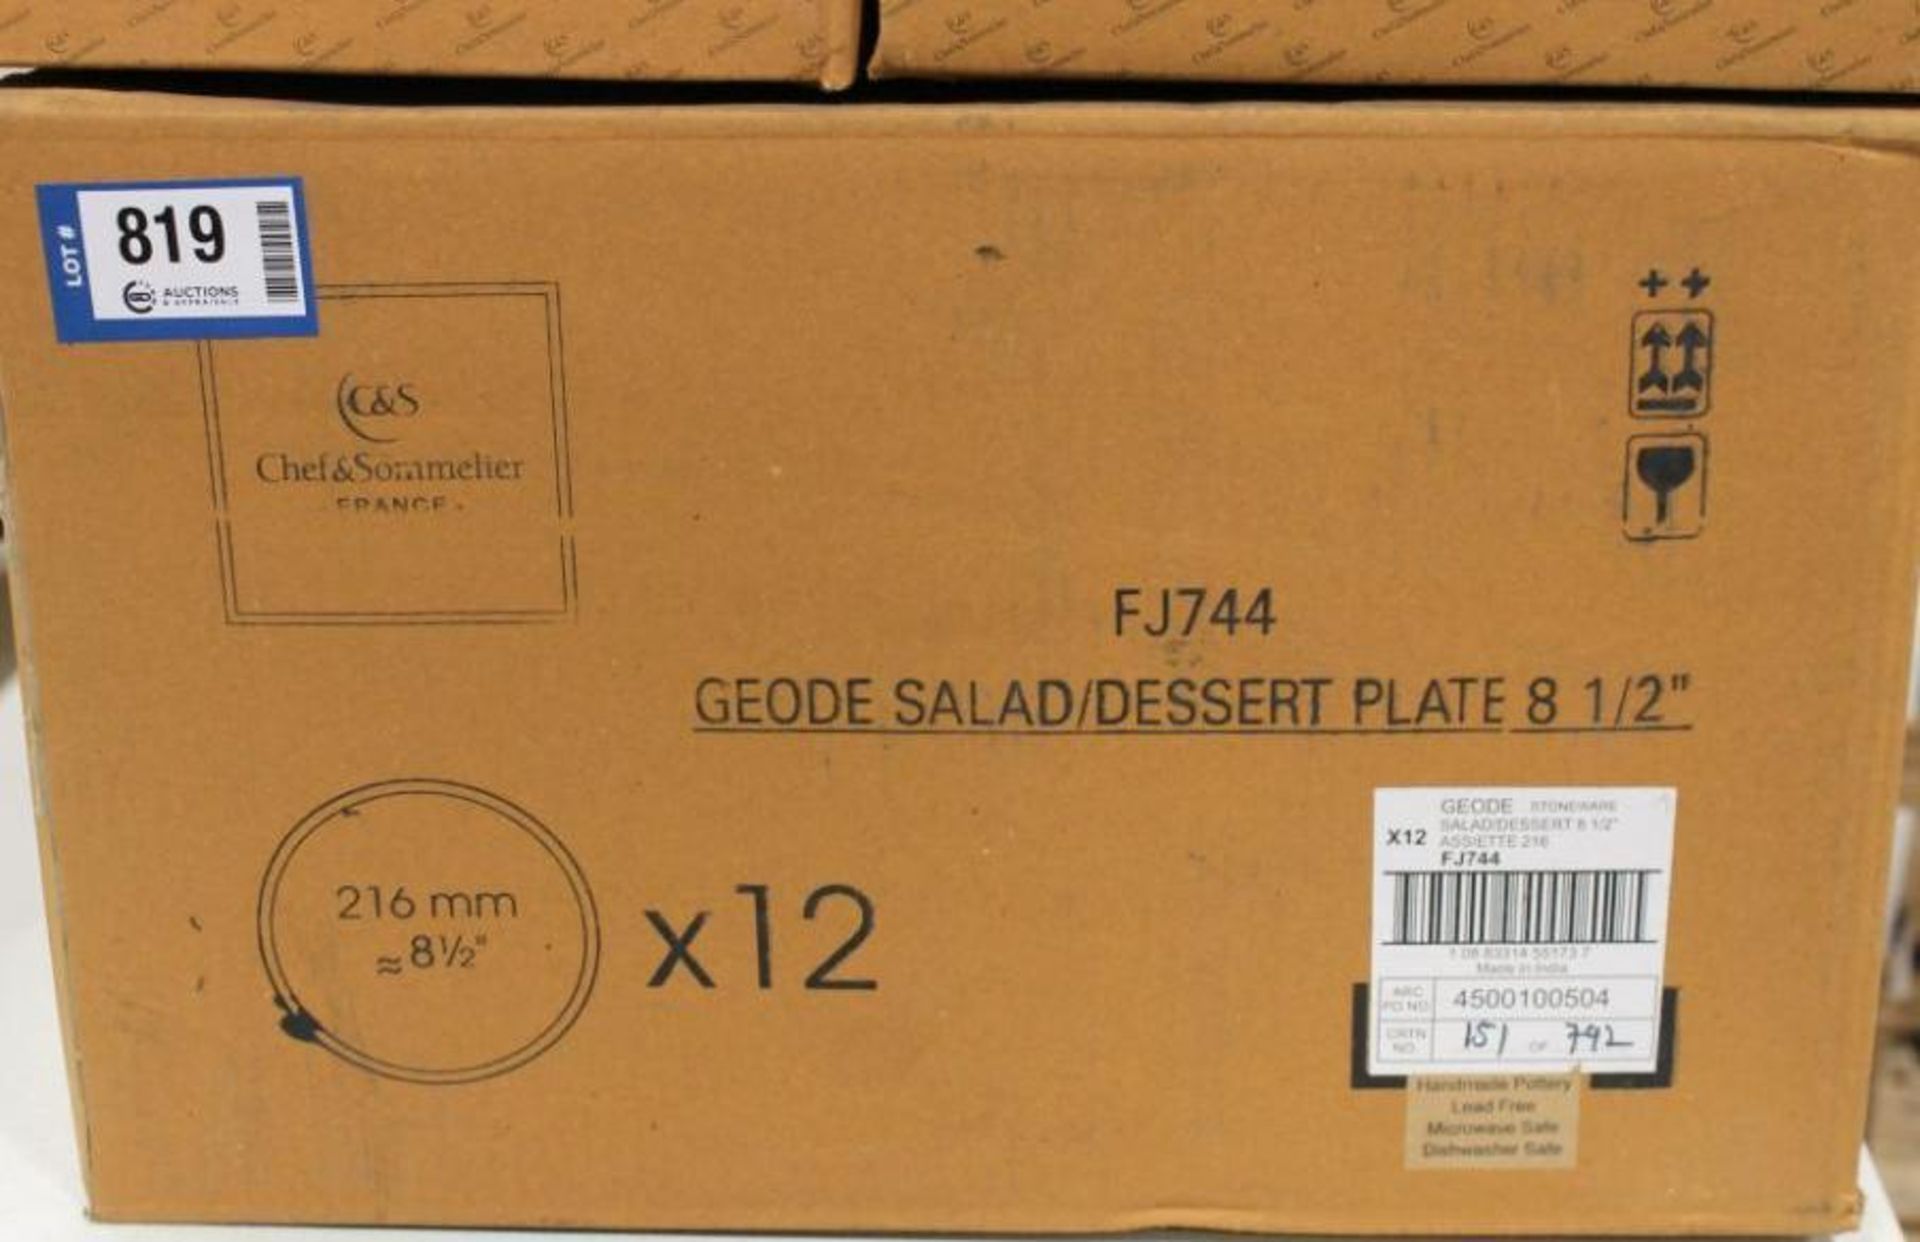 4 CASES OF CHEF & SOMMELIER FJ744 GEODE 8.5" SALAD/DESSERT PLATE - 12 PER CASE - NEW - Image 6 of 6